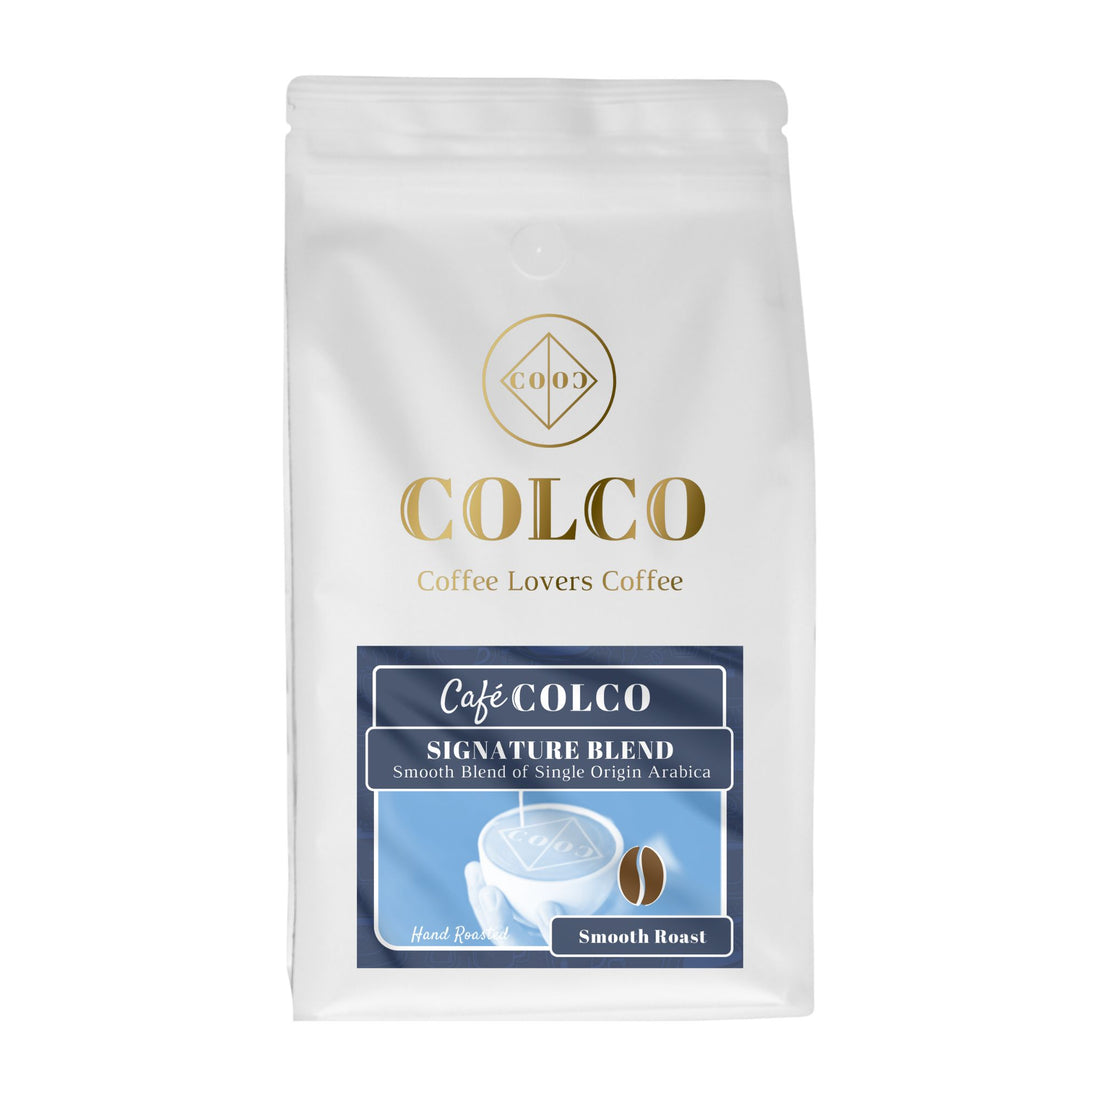 Cafe Colco Premium Signature Blend Coffee